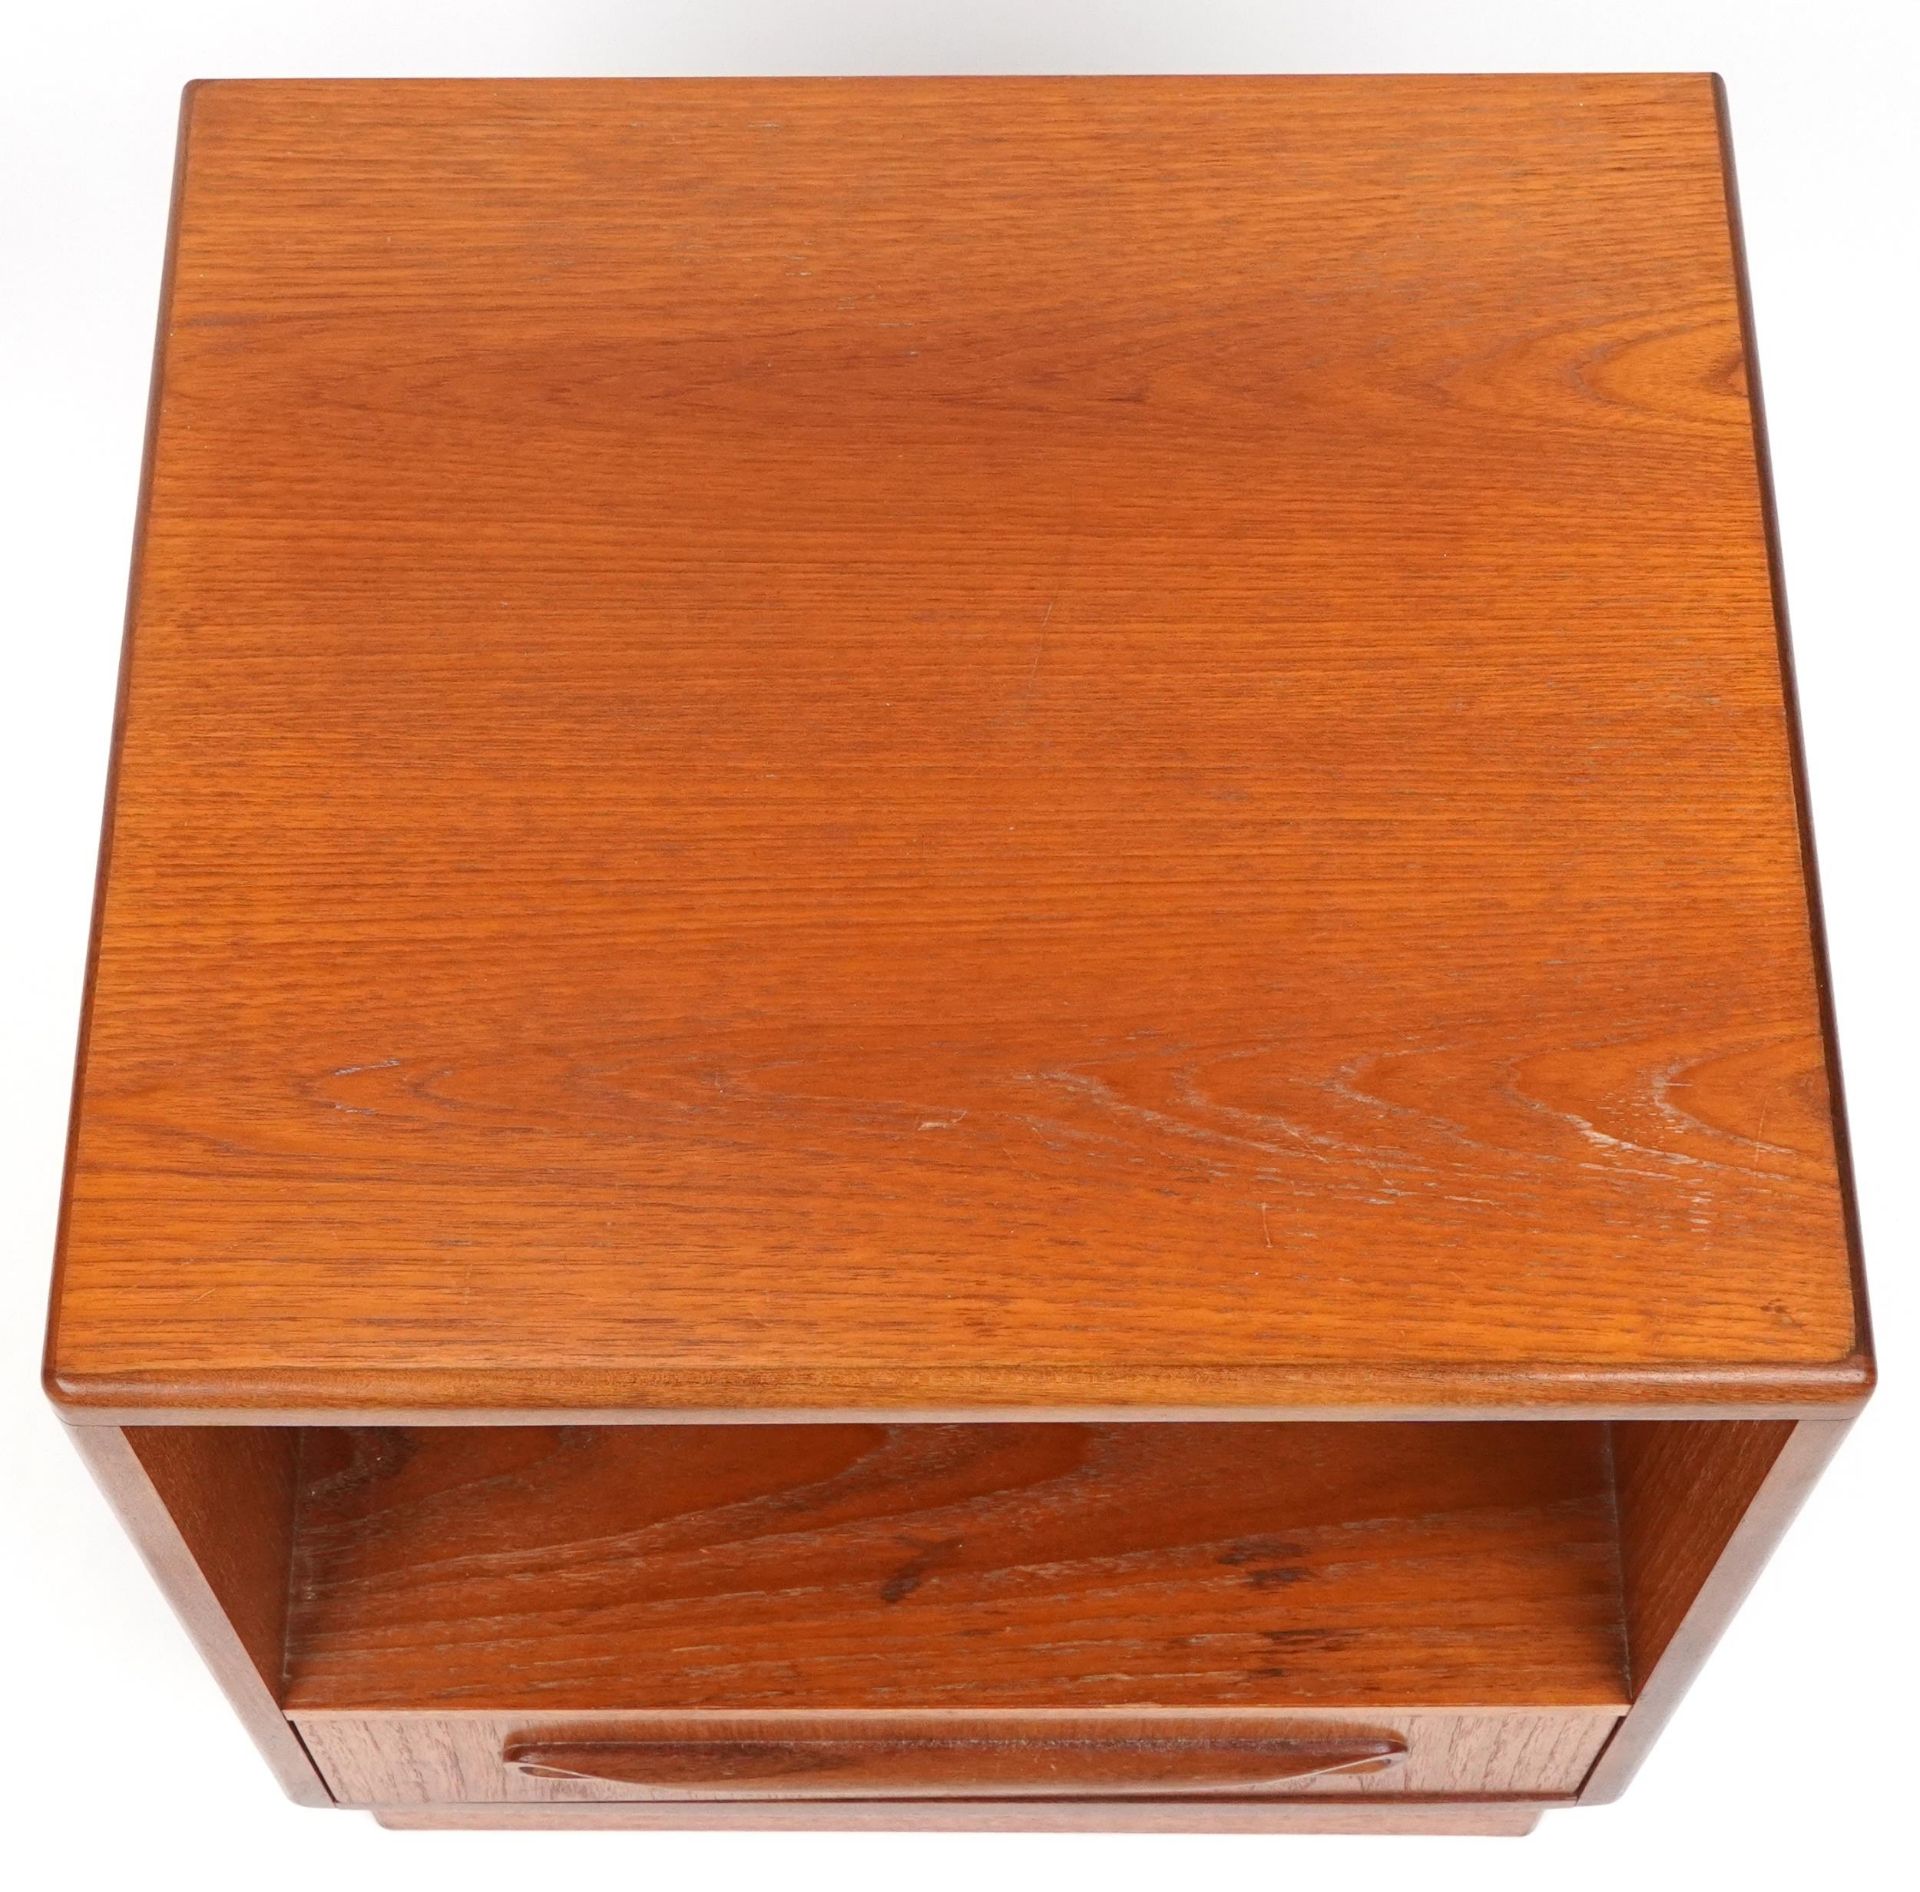 G Plan, Mid century Fresco teak nightstand with base drawer, 54cm H x 46cm W x 41cm D - Image 3 of 6